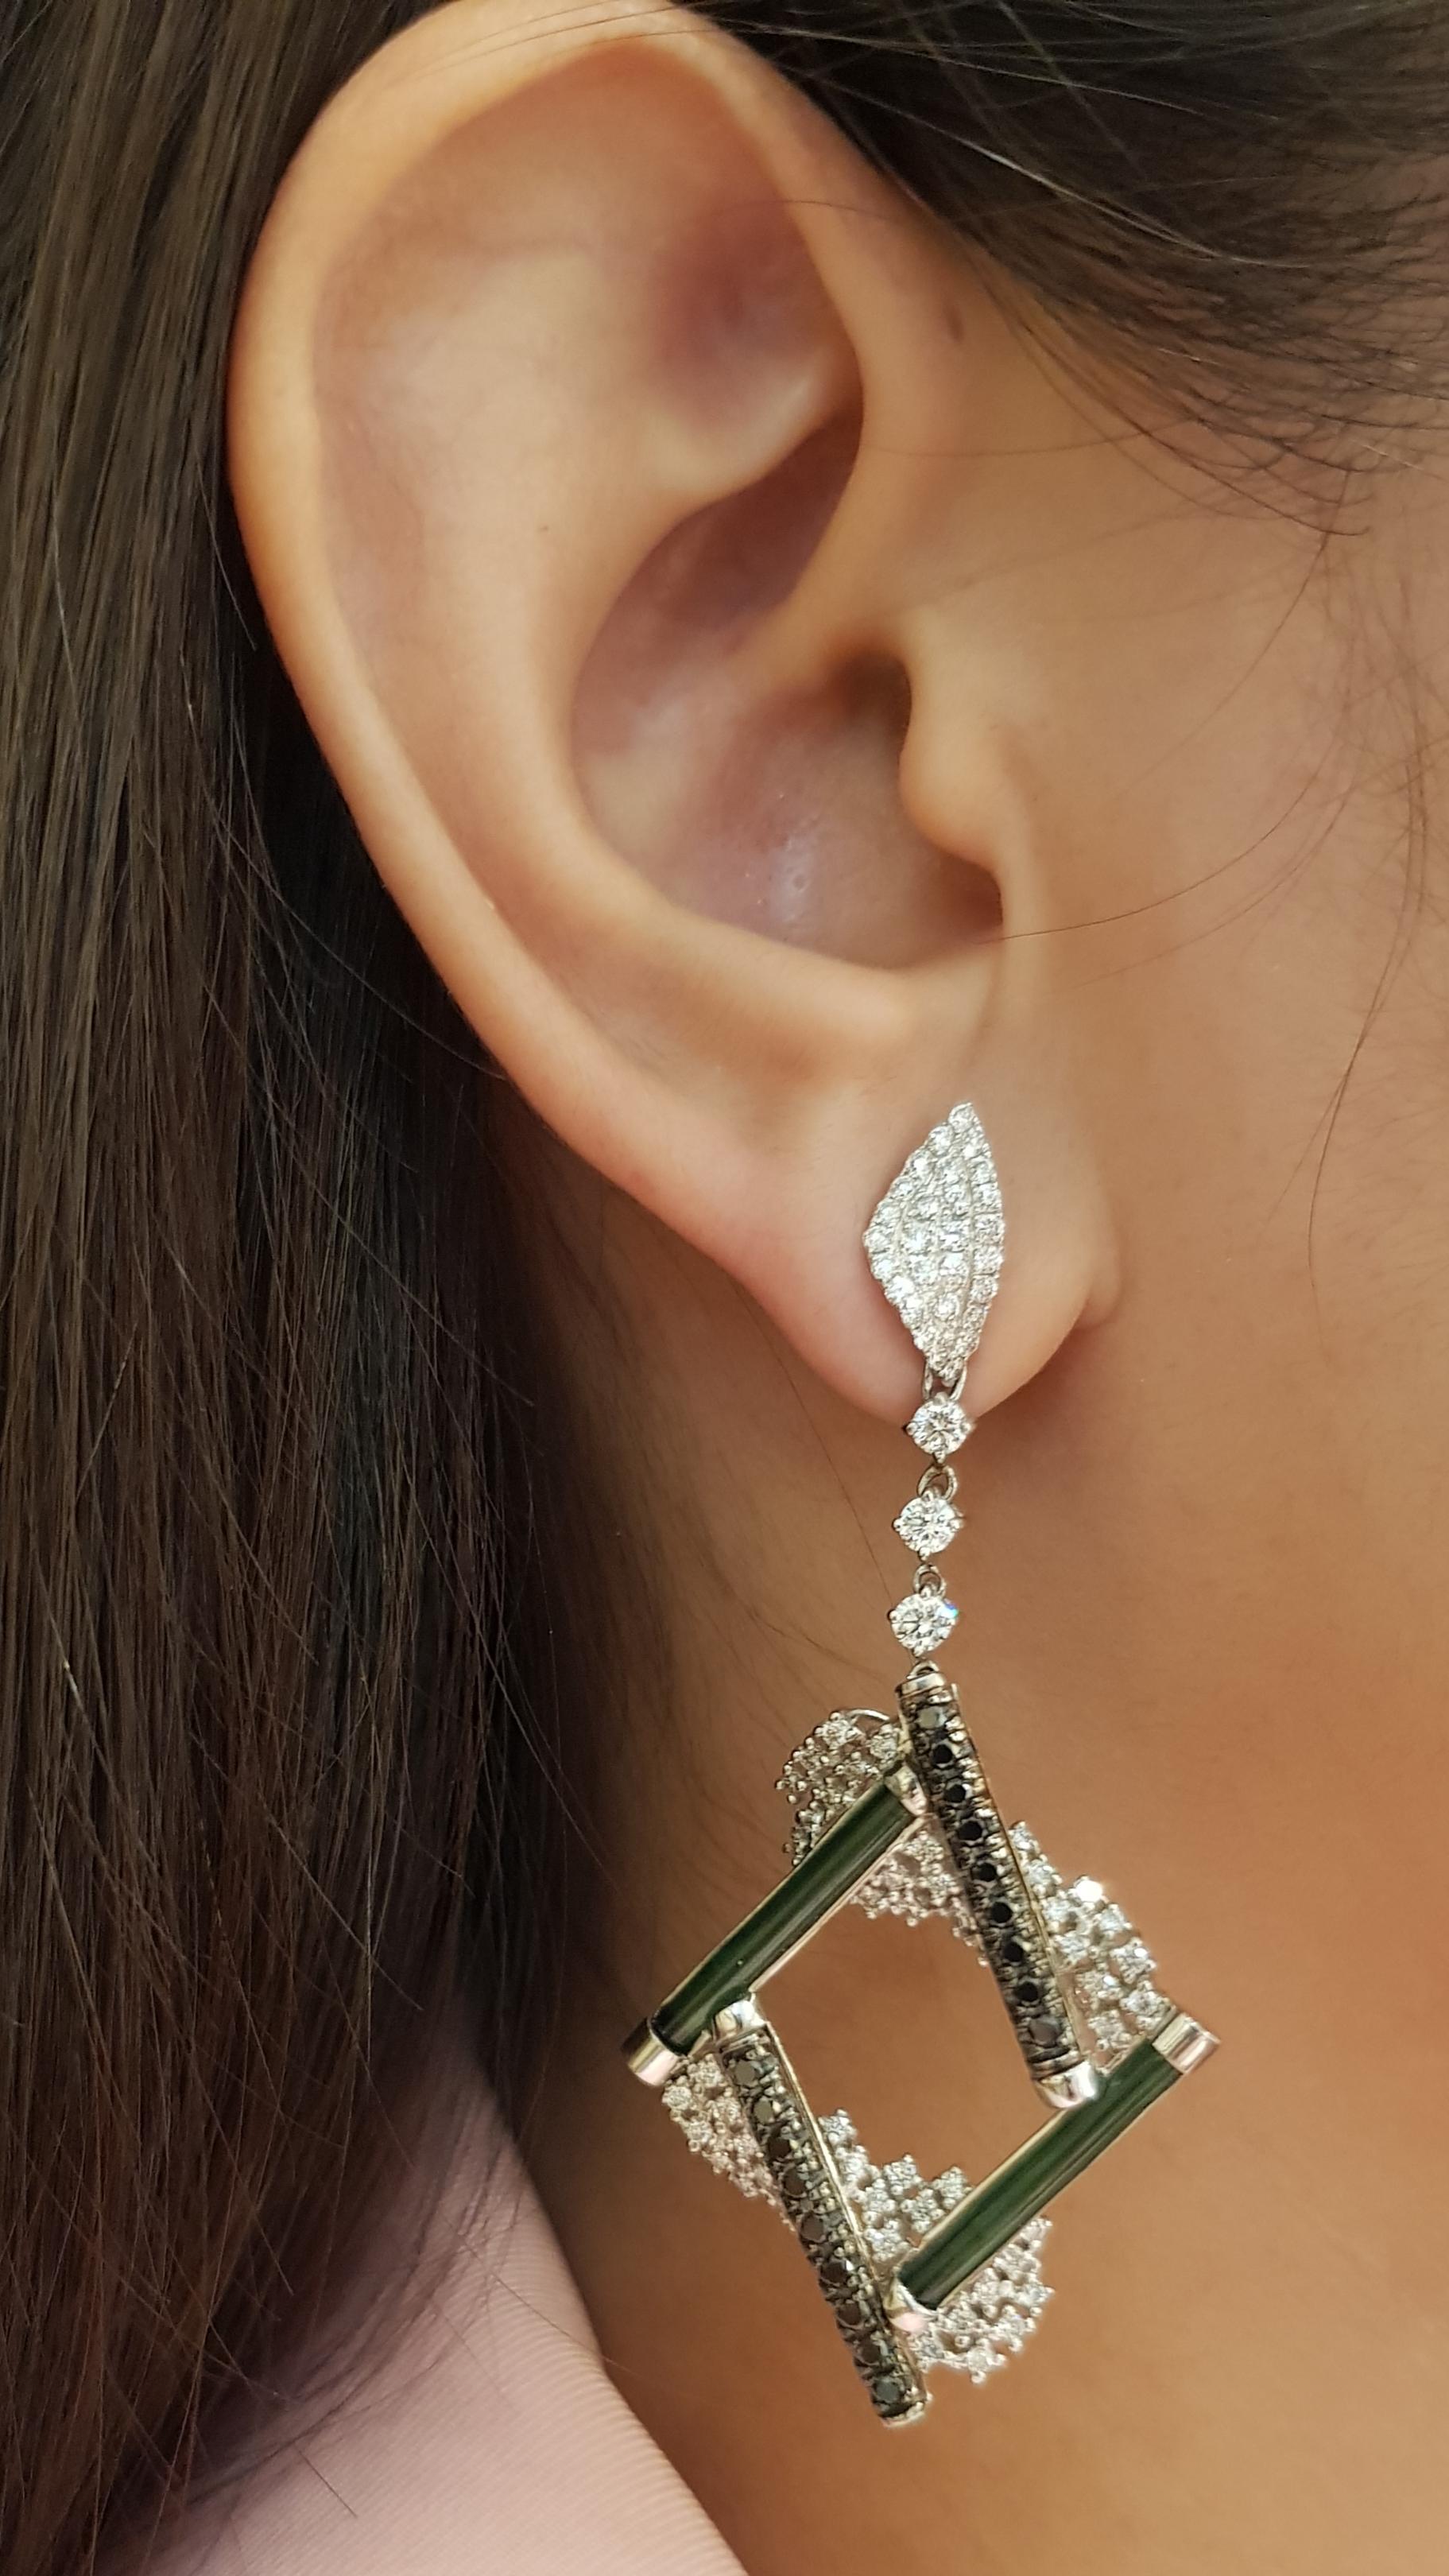 Tourmaline 4.15 carats, Diamond 1.97 carats with Brown Diamond 0.65 carat Earrings set in 18 Karat White Gold Settings

Width:  2.7 cm 
Length:  6.0 cm
Total Weight: 20.22 grams

